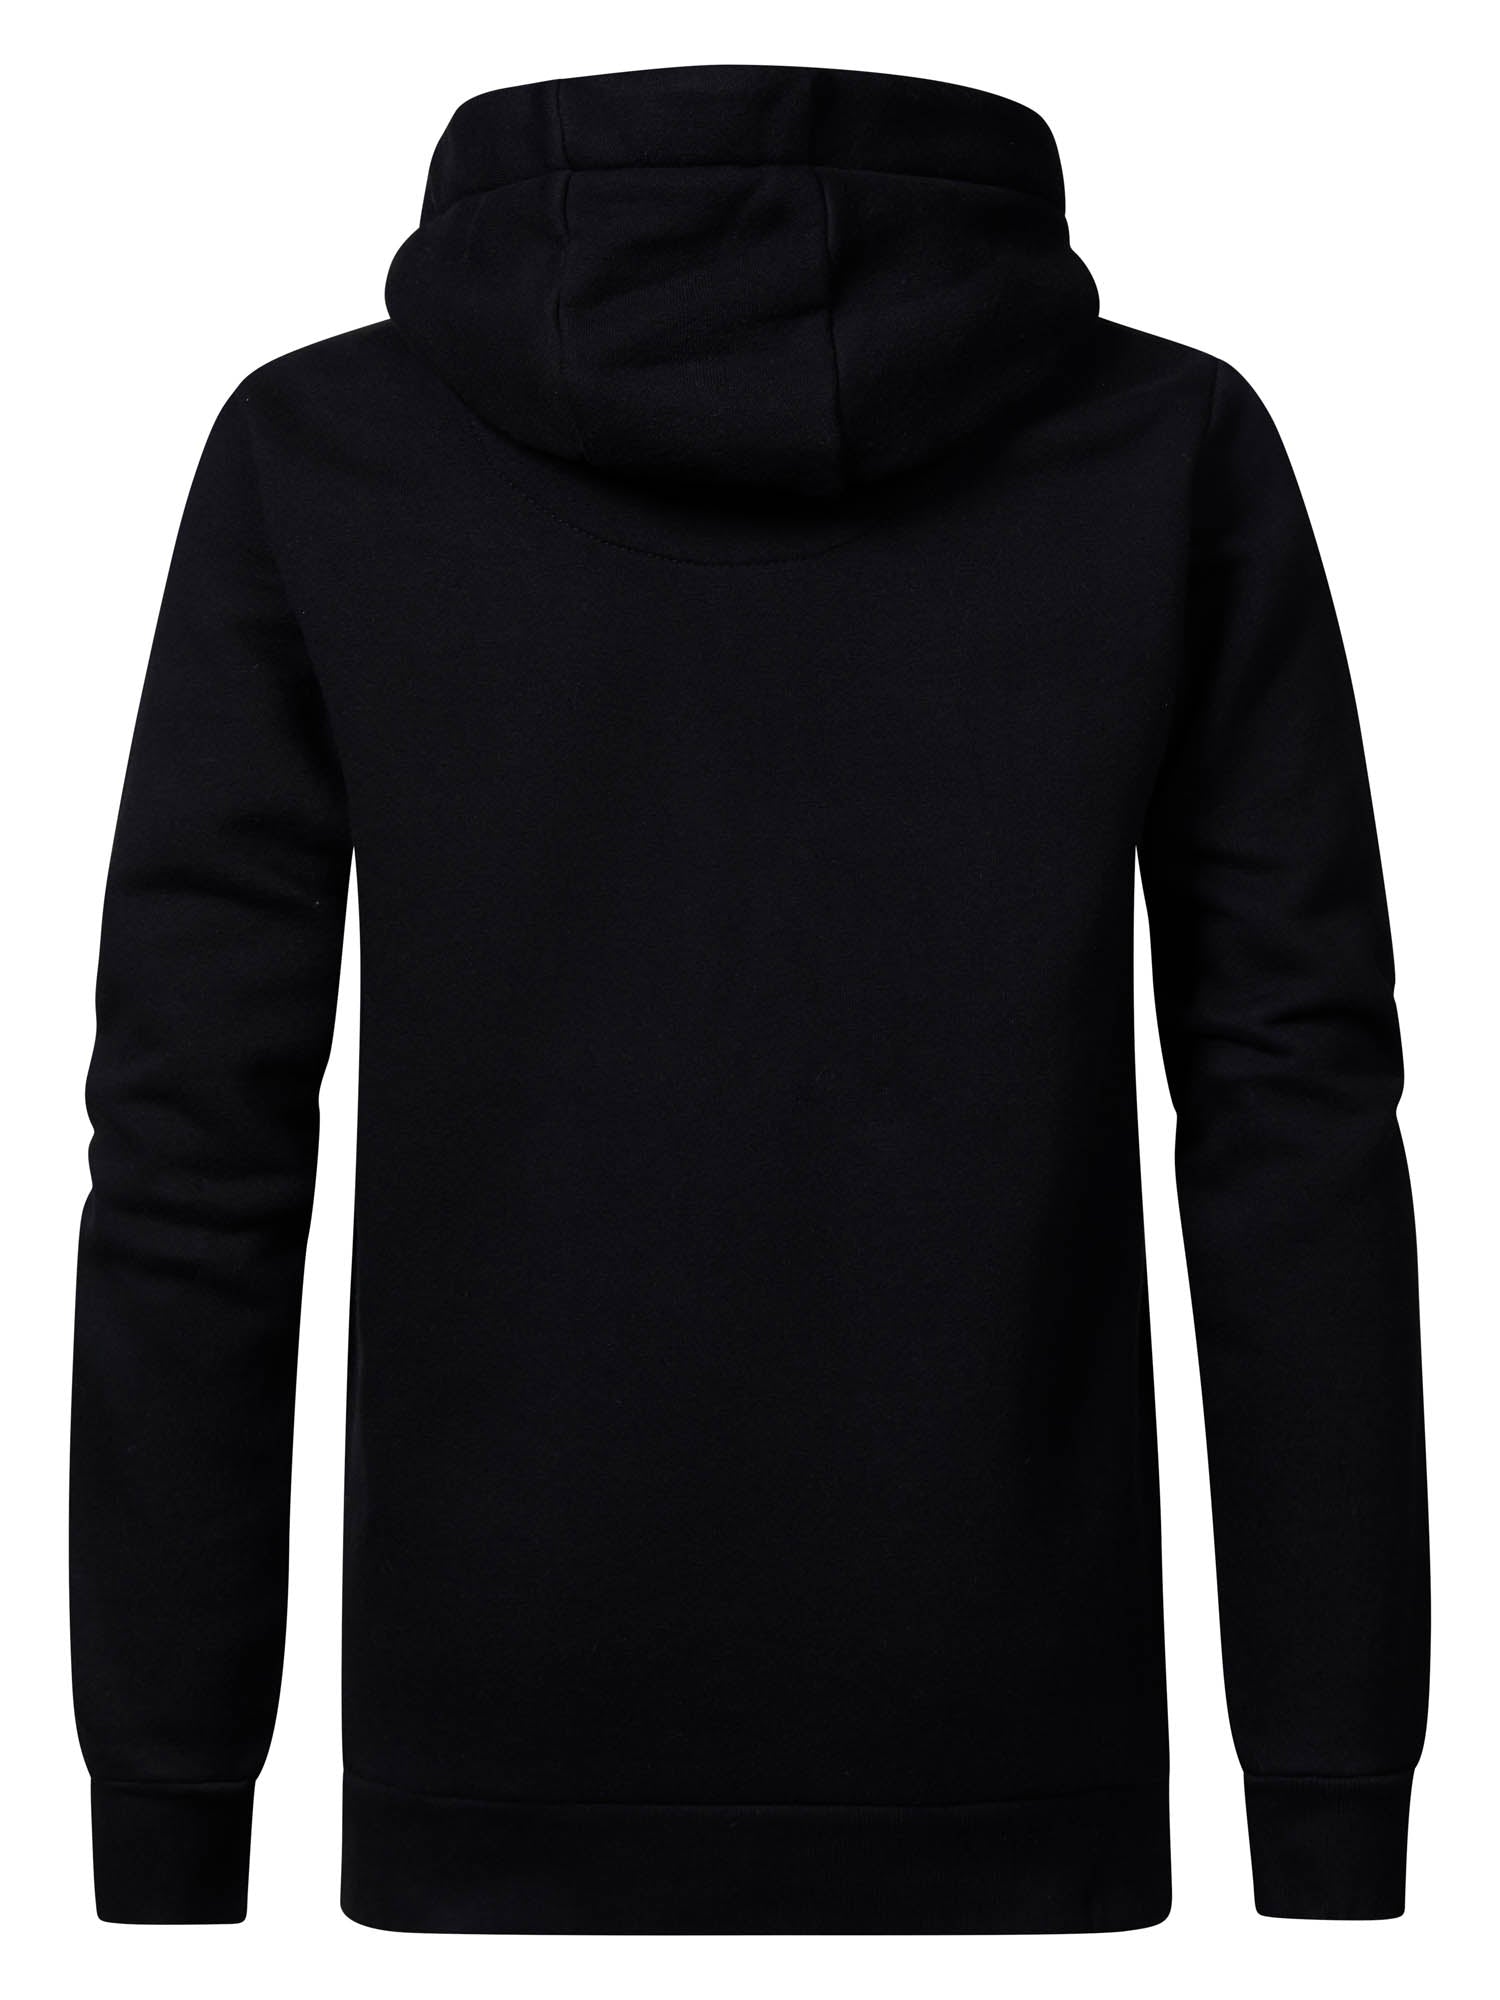 Jongens Boys Sweater Hooded Print van Petrol in de kleur Black in maat 164.